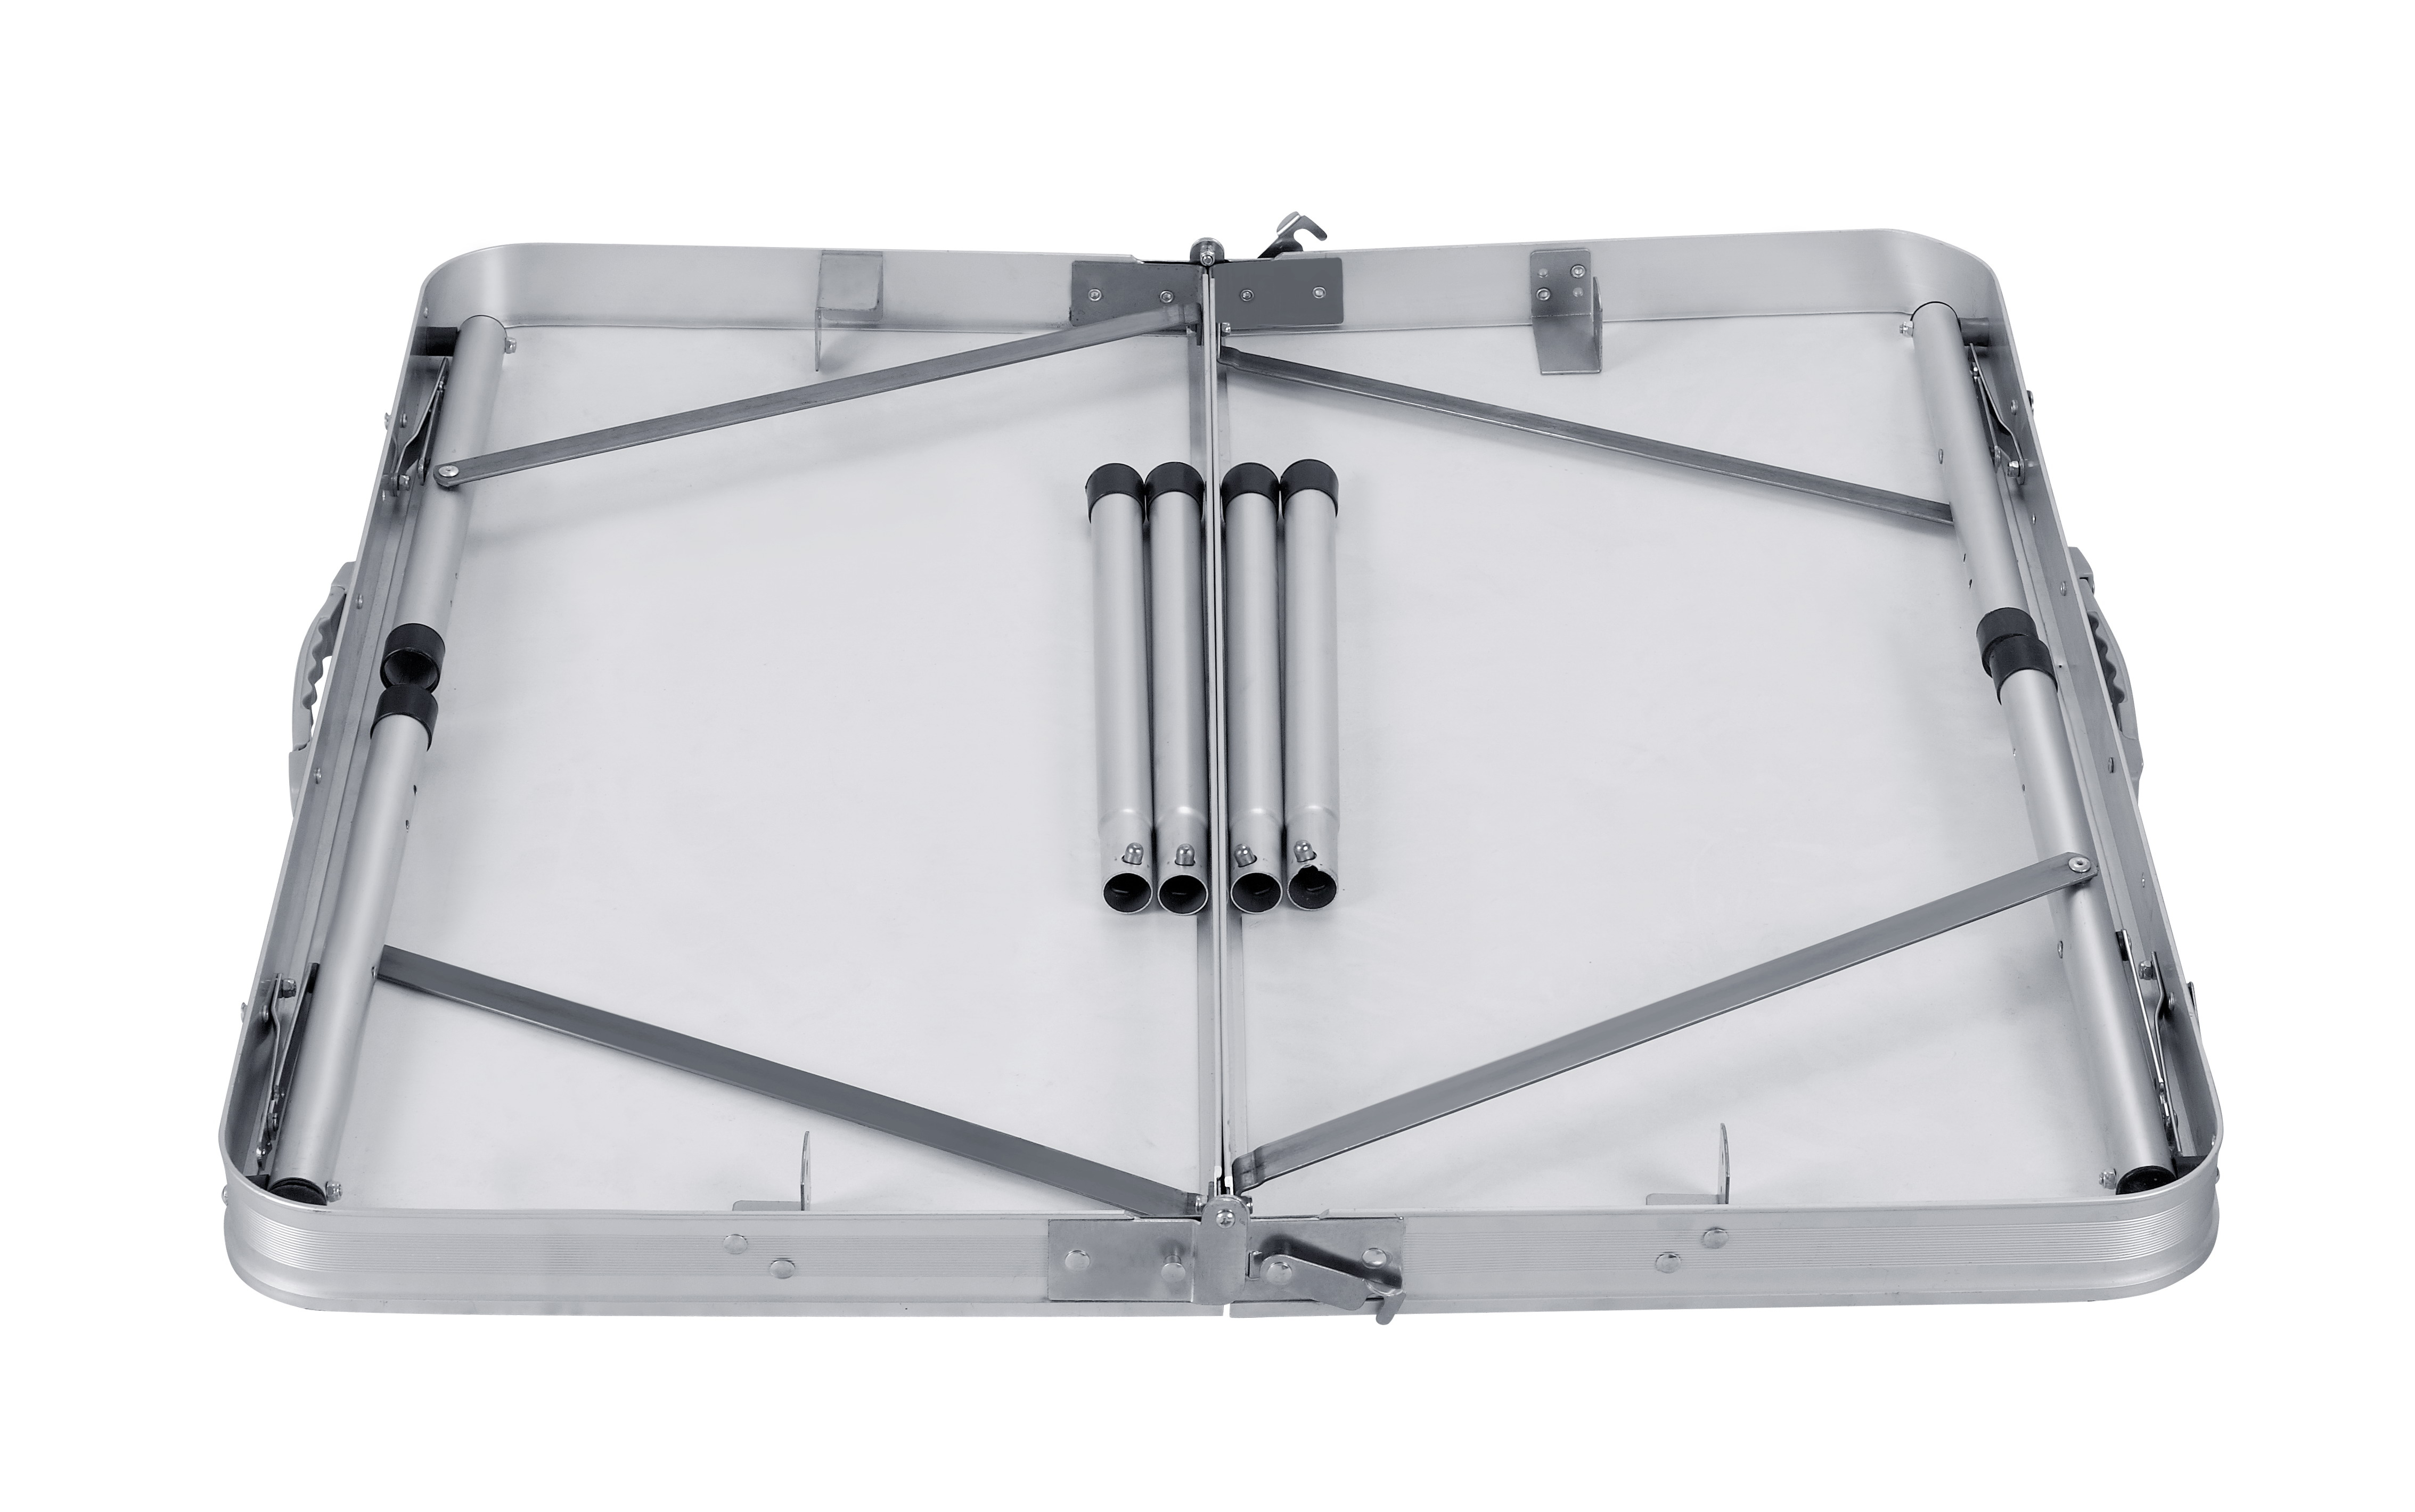 Uplion Aluminum MDF Top Folding Portable Camping Table